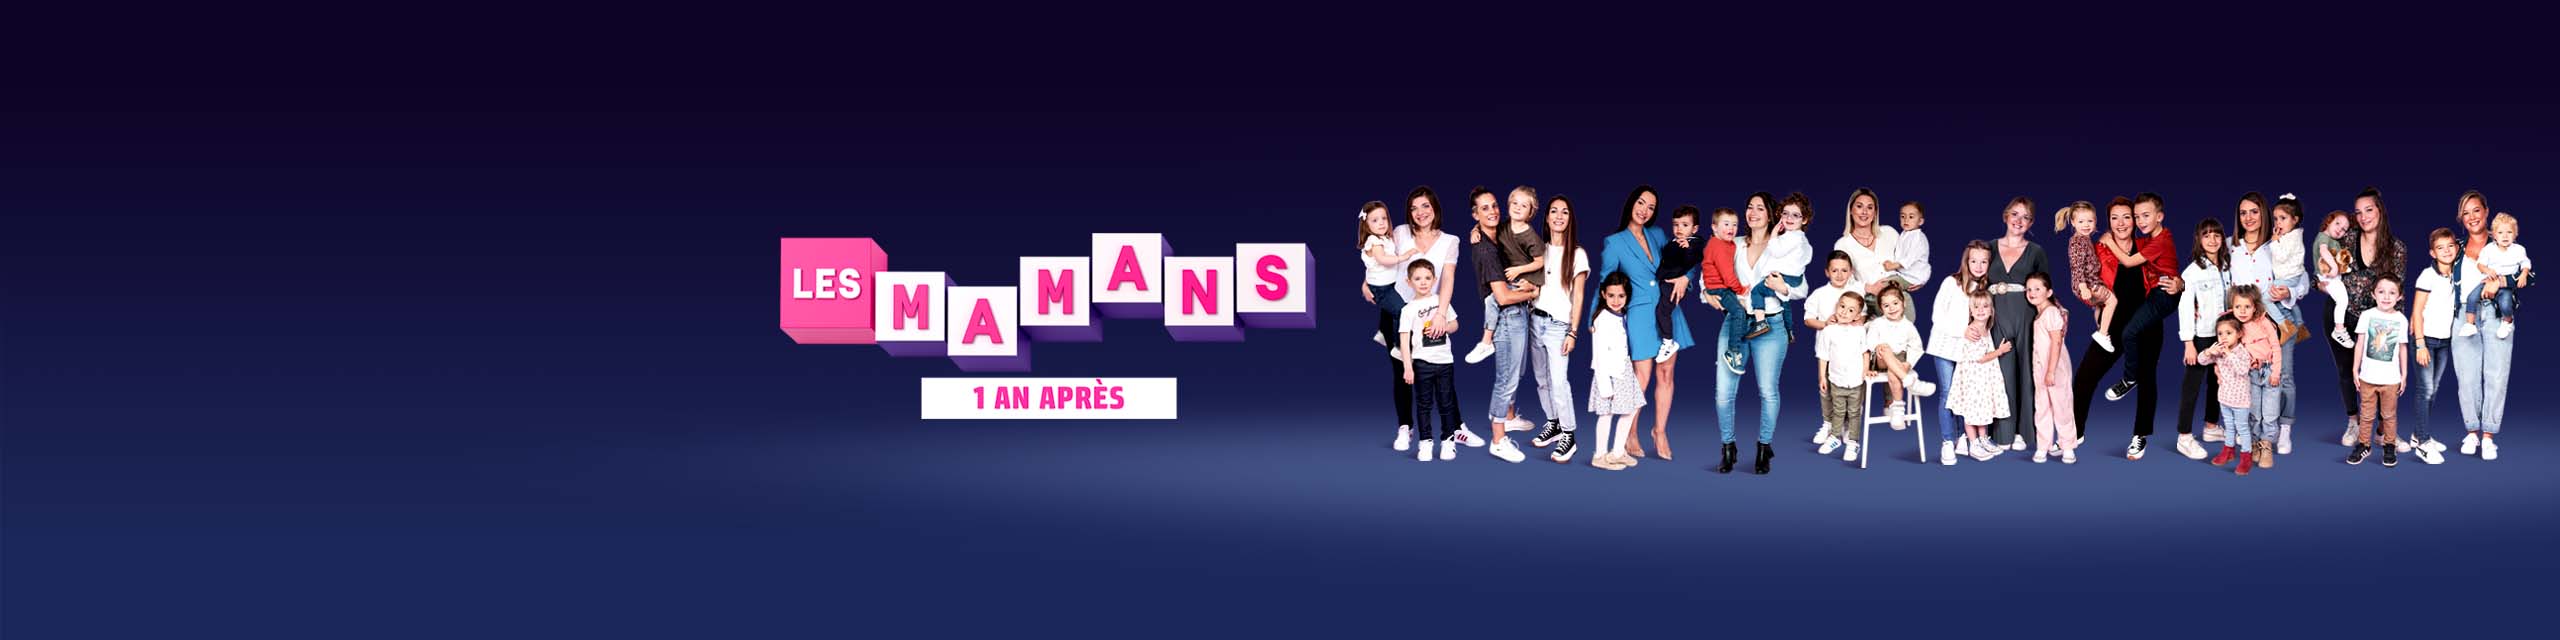 Les_mamans_1_ans_apres